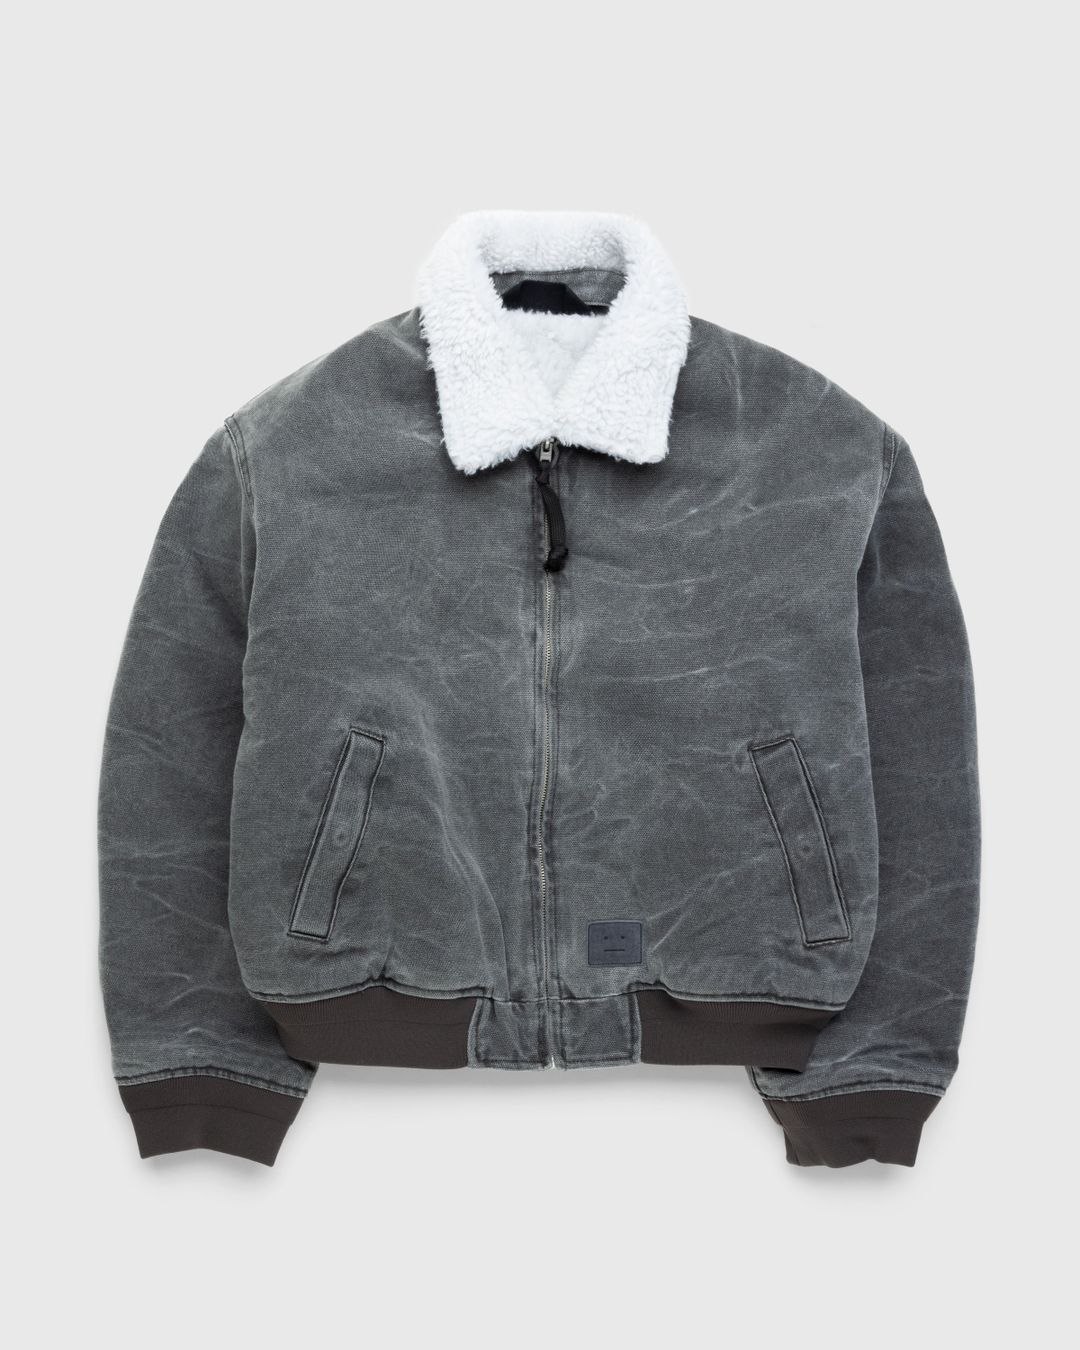 Acne Studios – Cotton Canvas Bomber Jacket Grey | Highsnobiety Shop